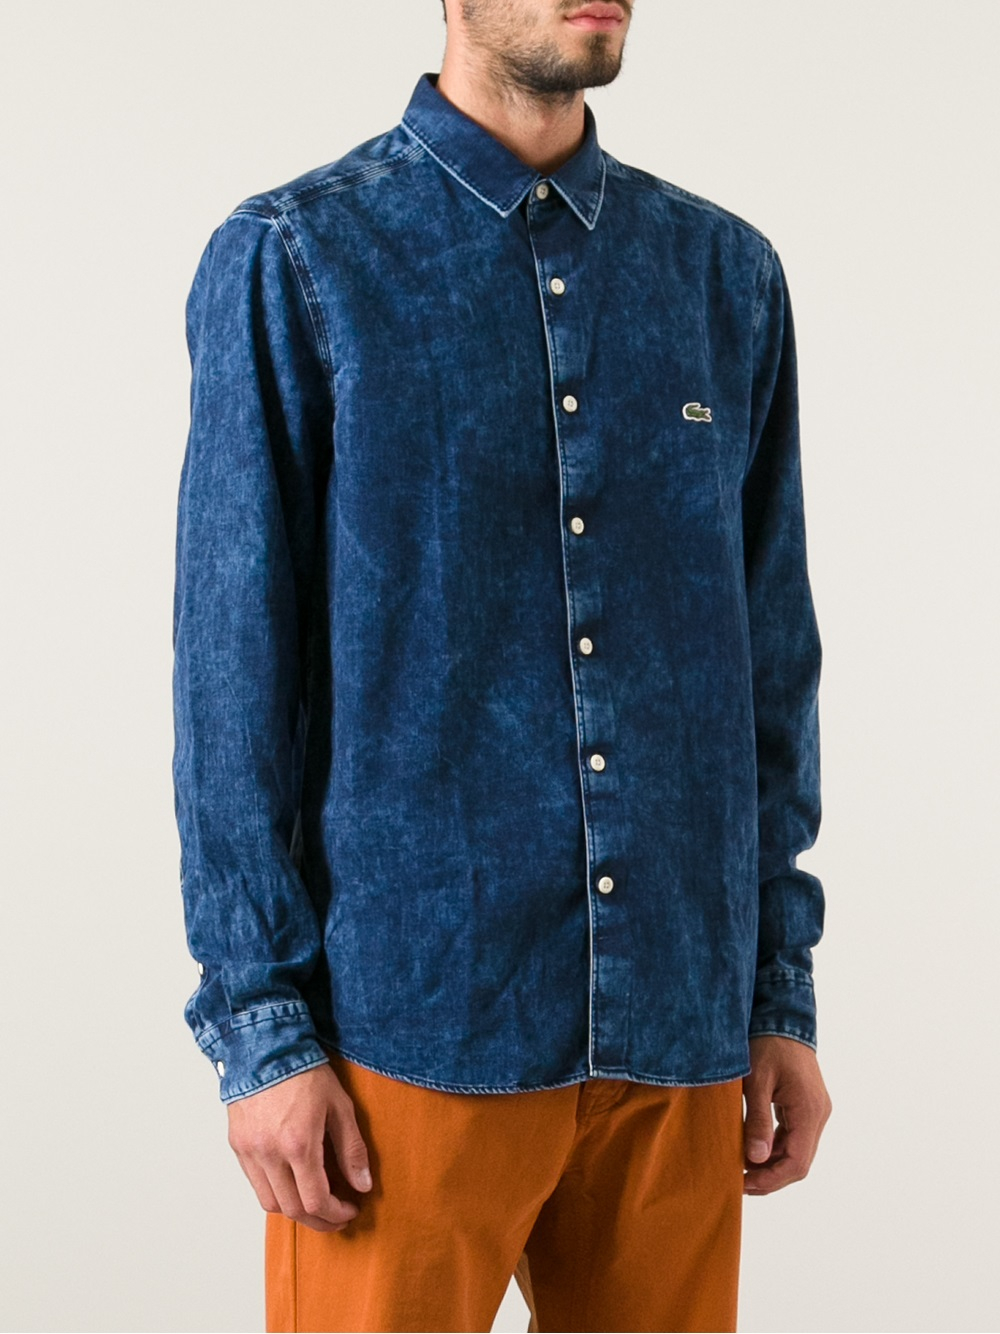 Lacoste L!ive Denim Shirt in Blue for Men | Lyst